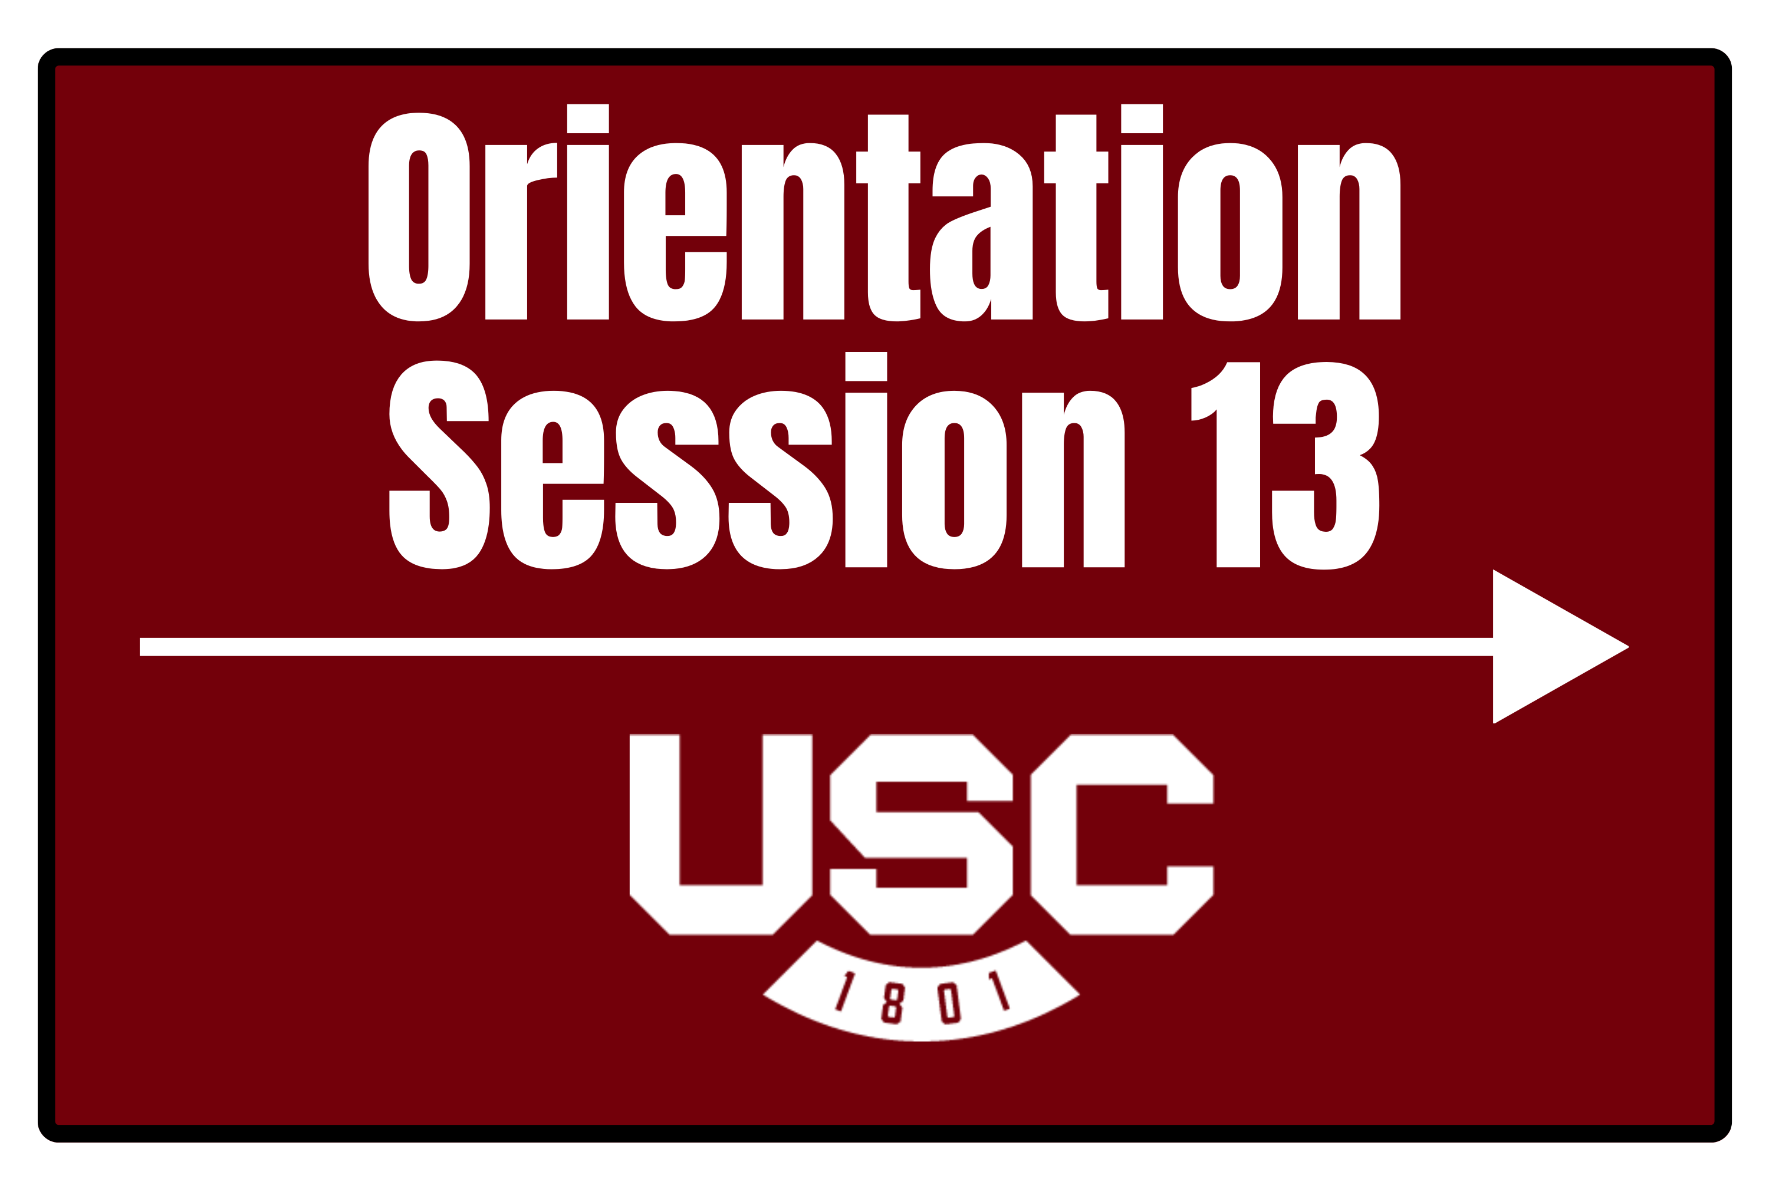 Orientation Session 13: July 10 - 11